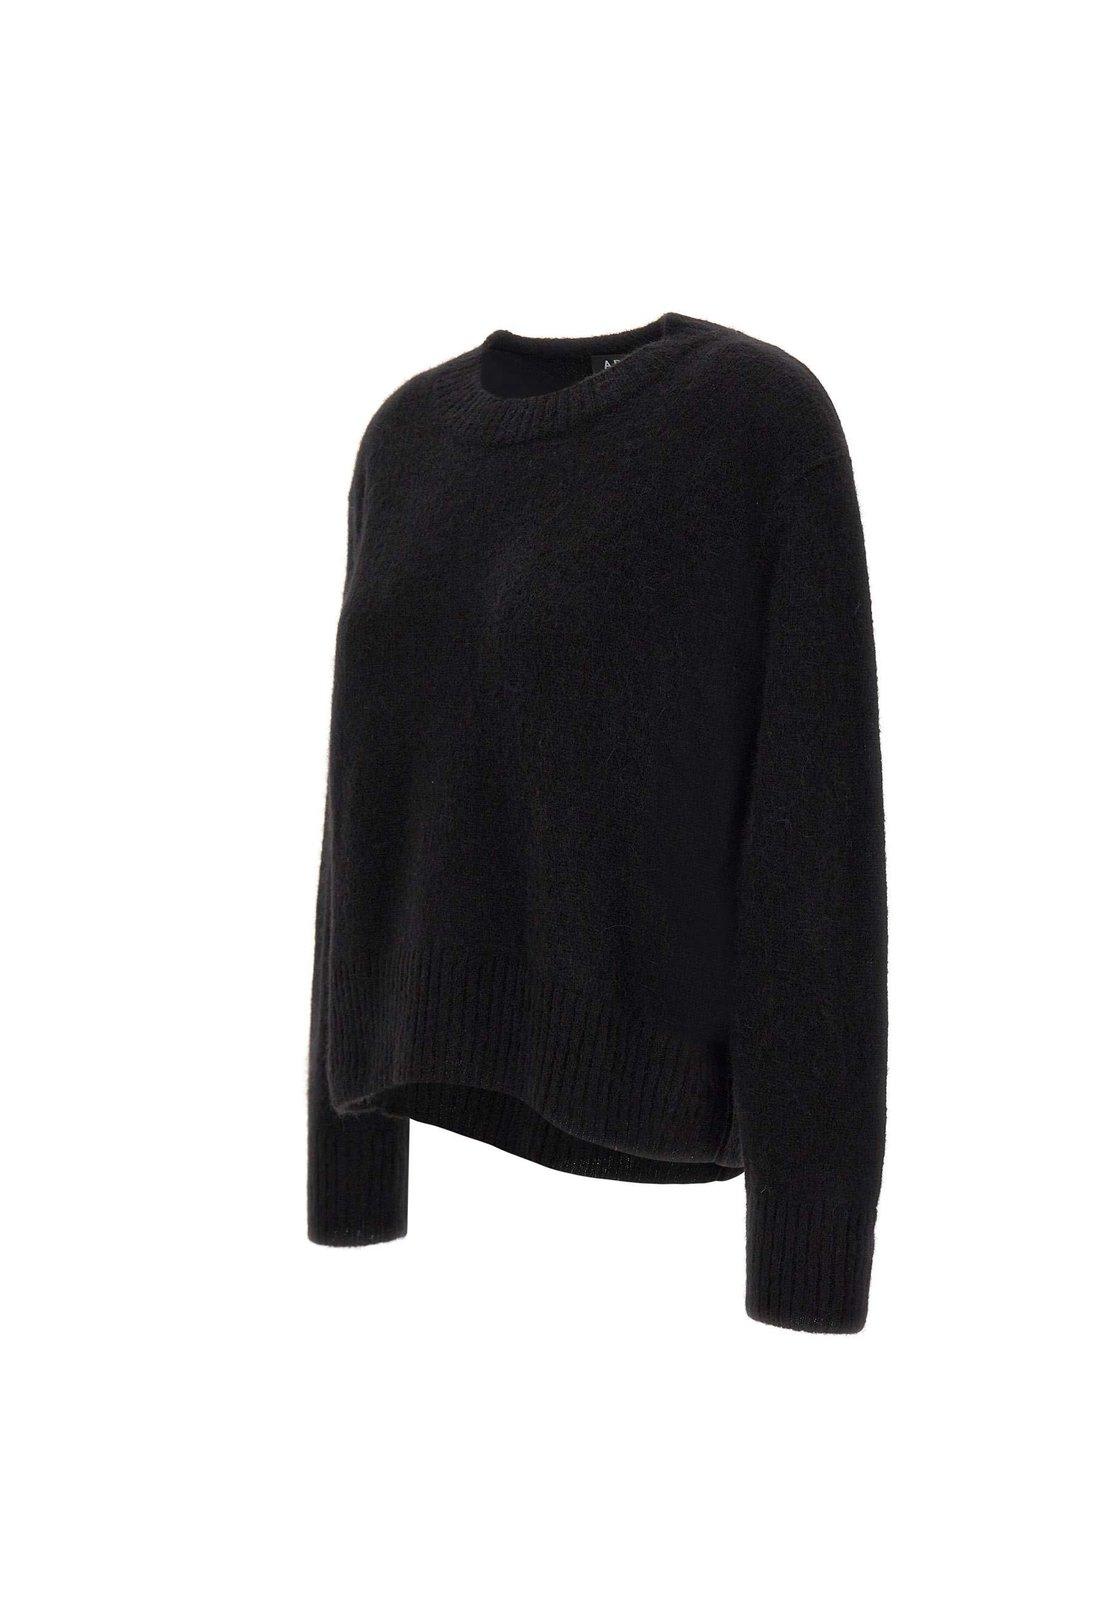 Shop Apc Crewneck Brushed Jumper Sweater In Black